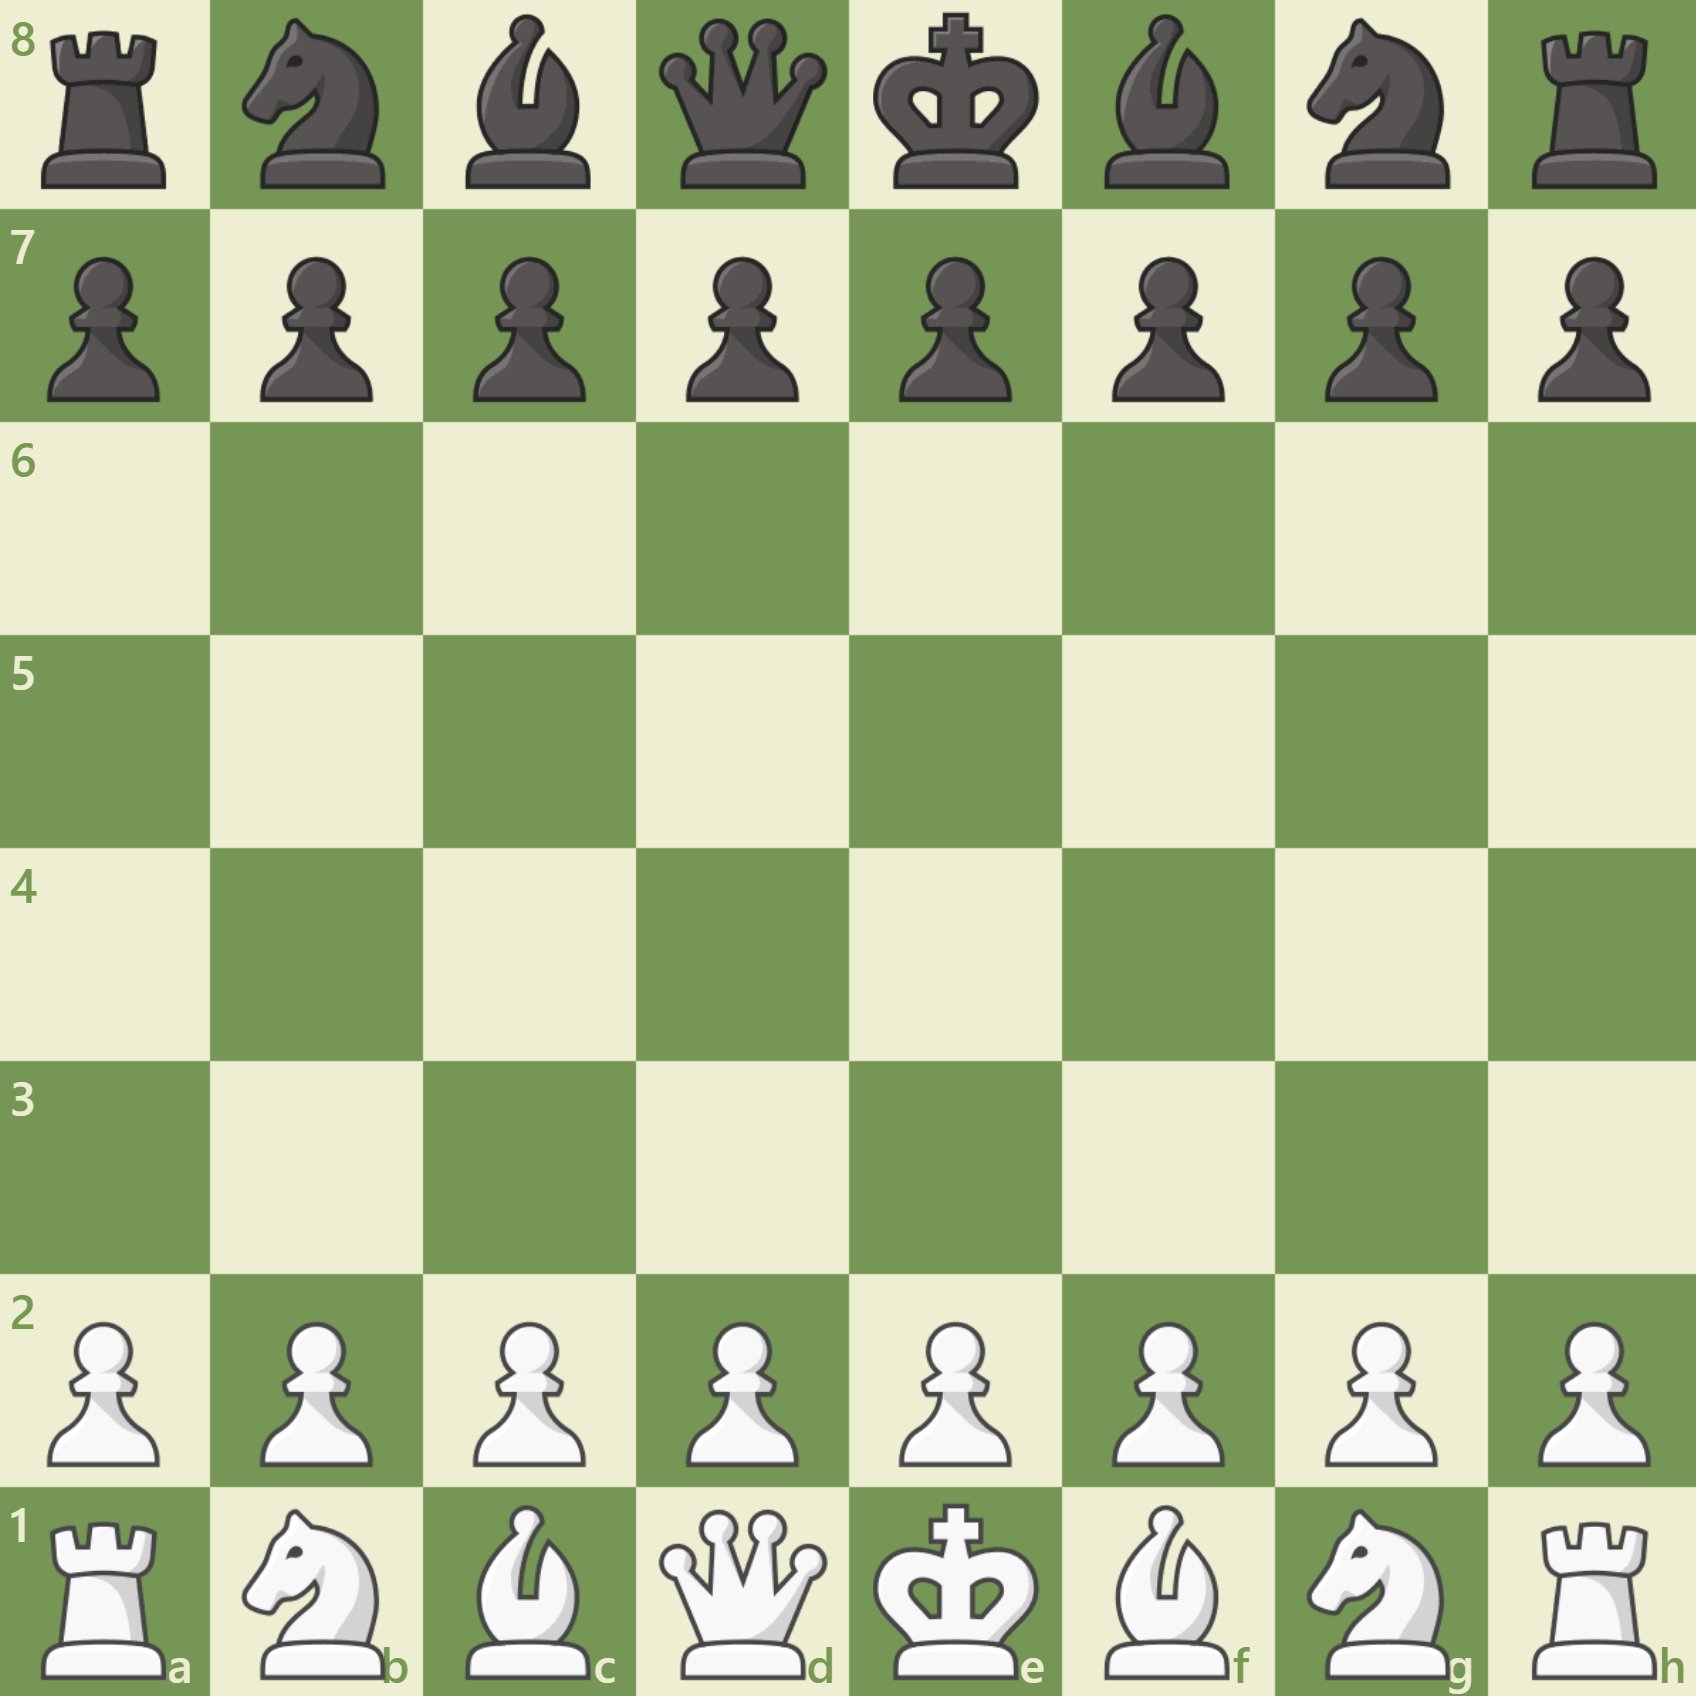 Chess.com - India (@chesscom_in) / X